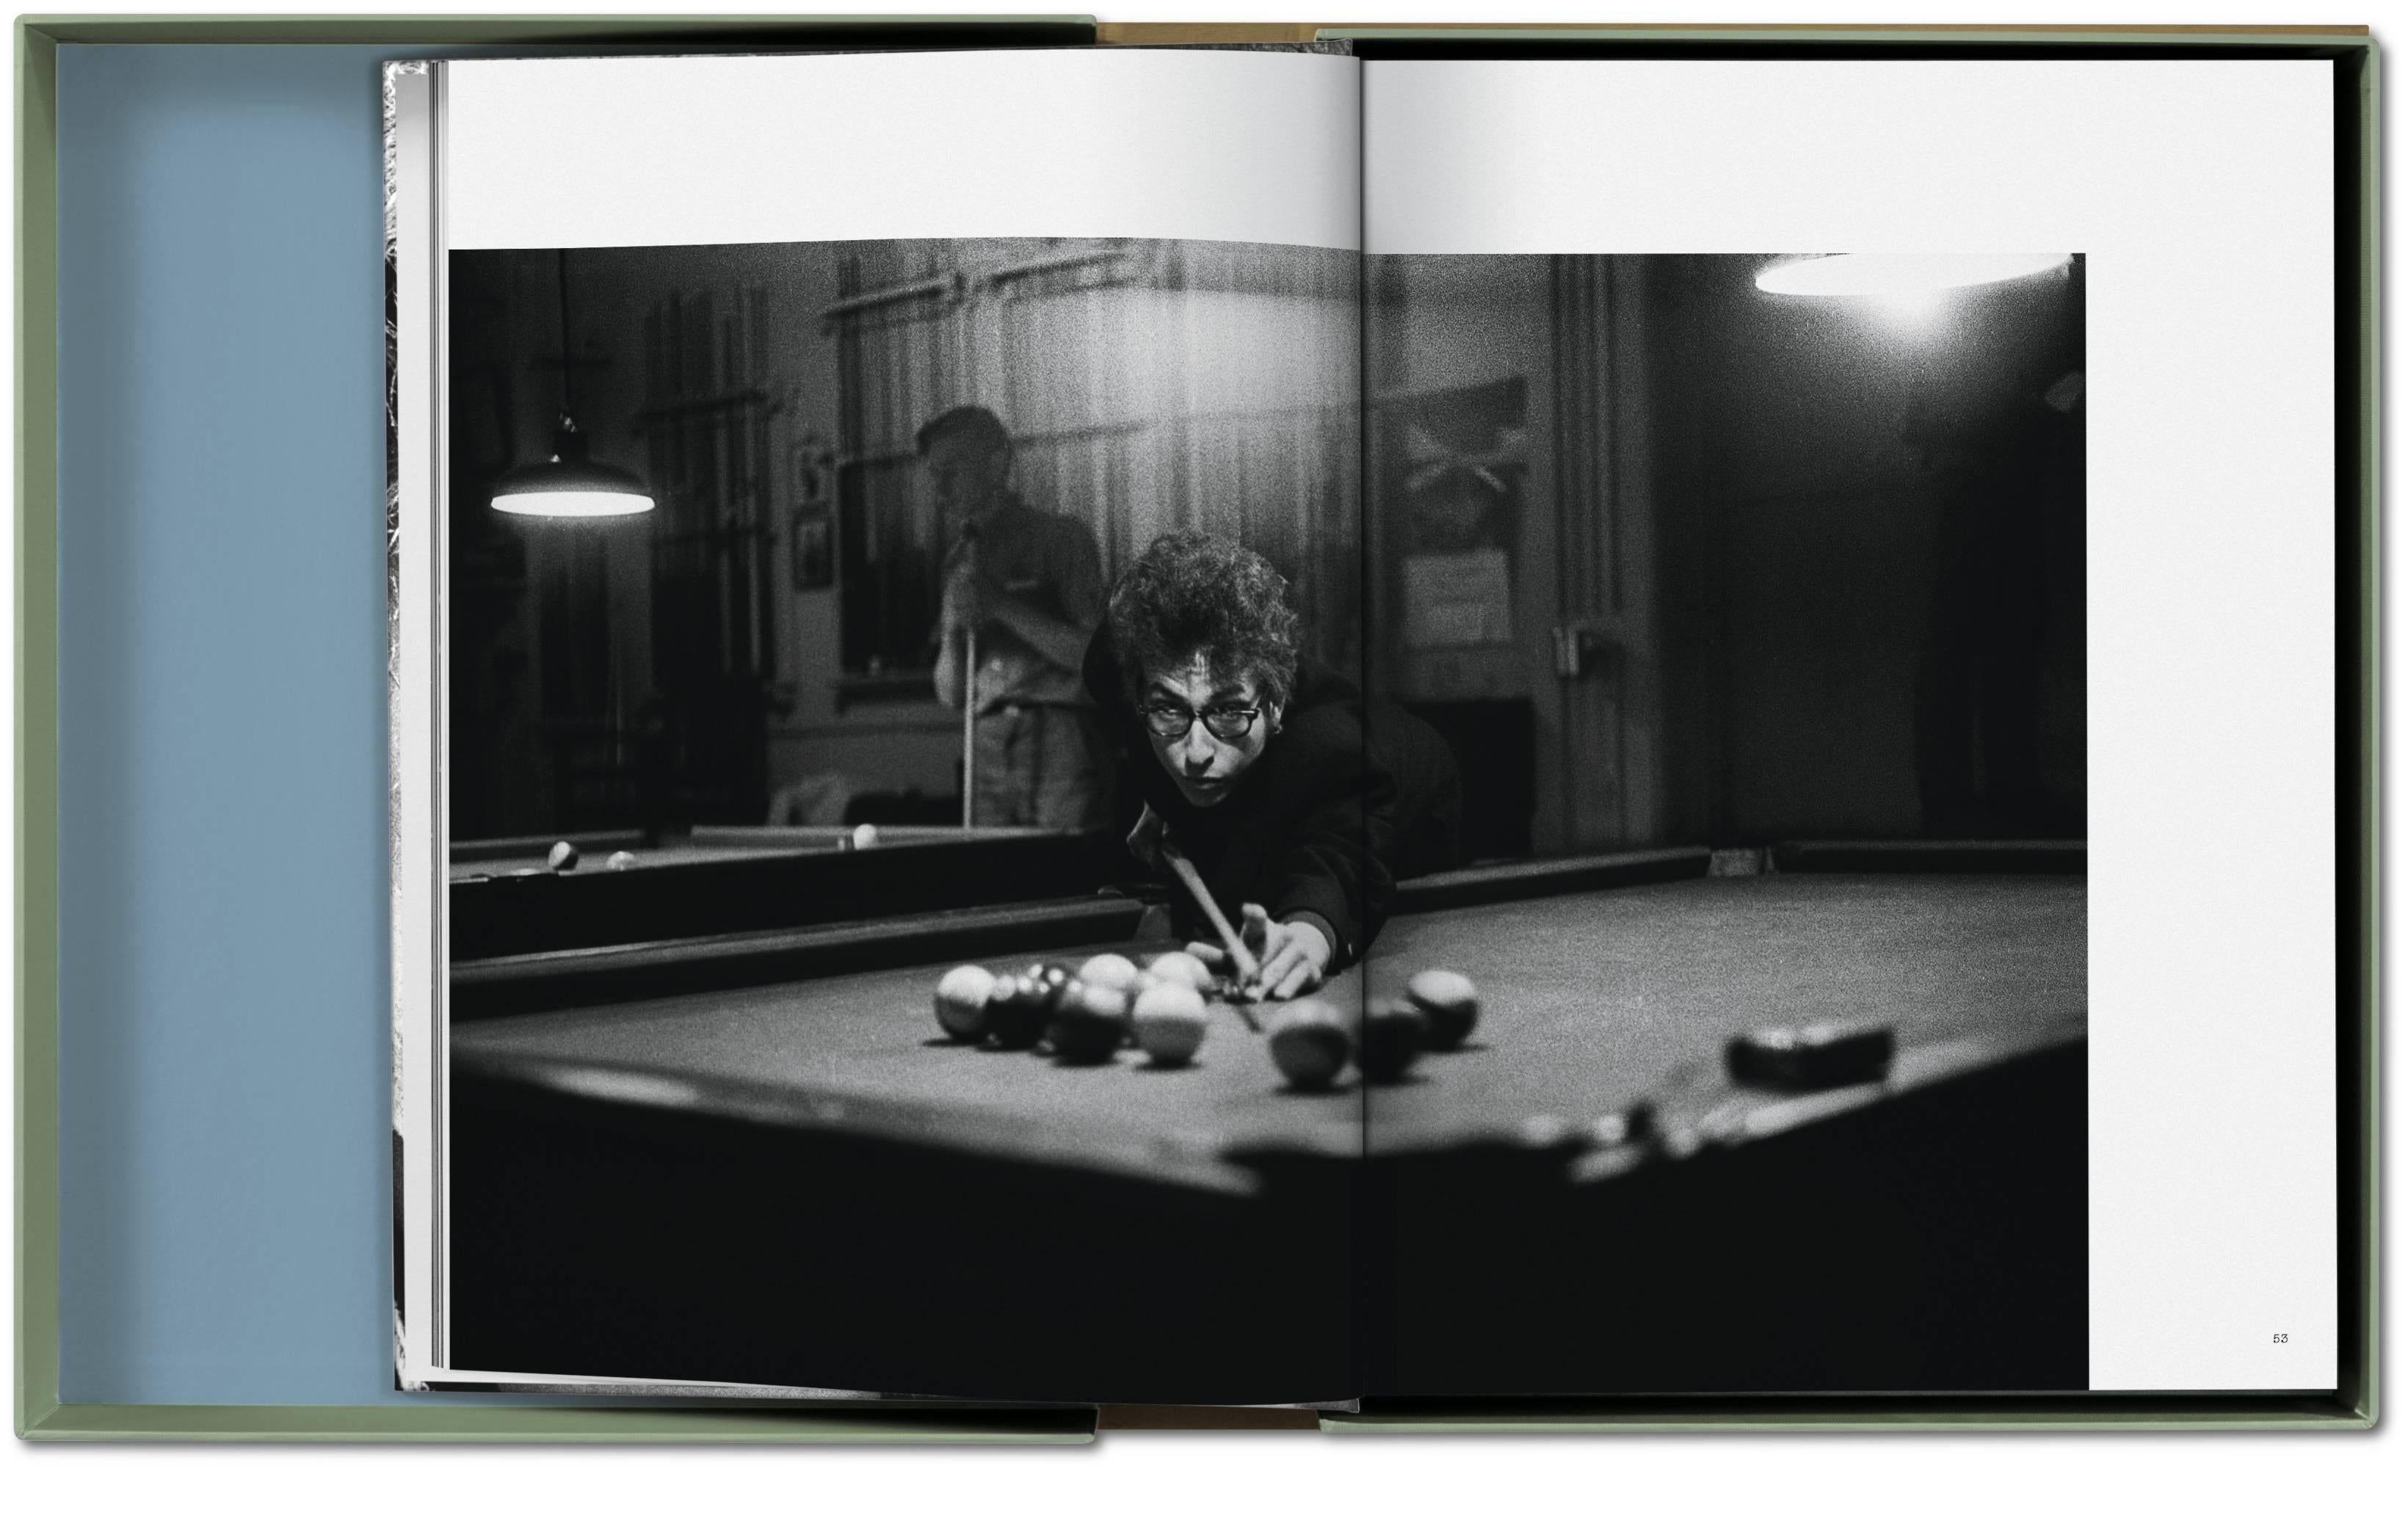 Daniel Kramer, Bob Dylan, Art Edition No. 1-100 ‘Bob Dylan with Dark Glasses, NY 1